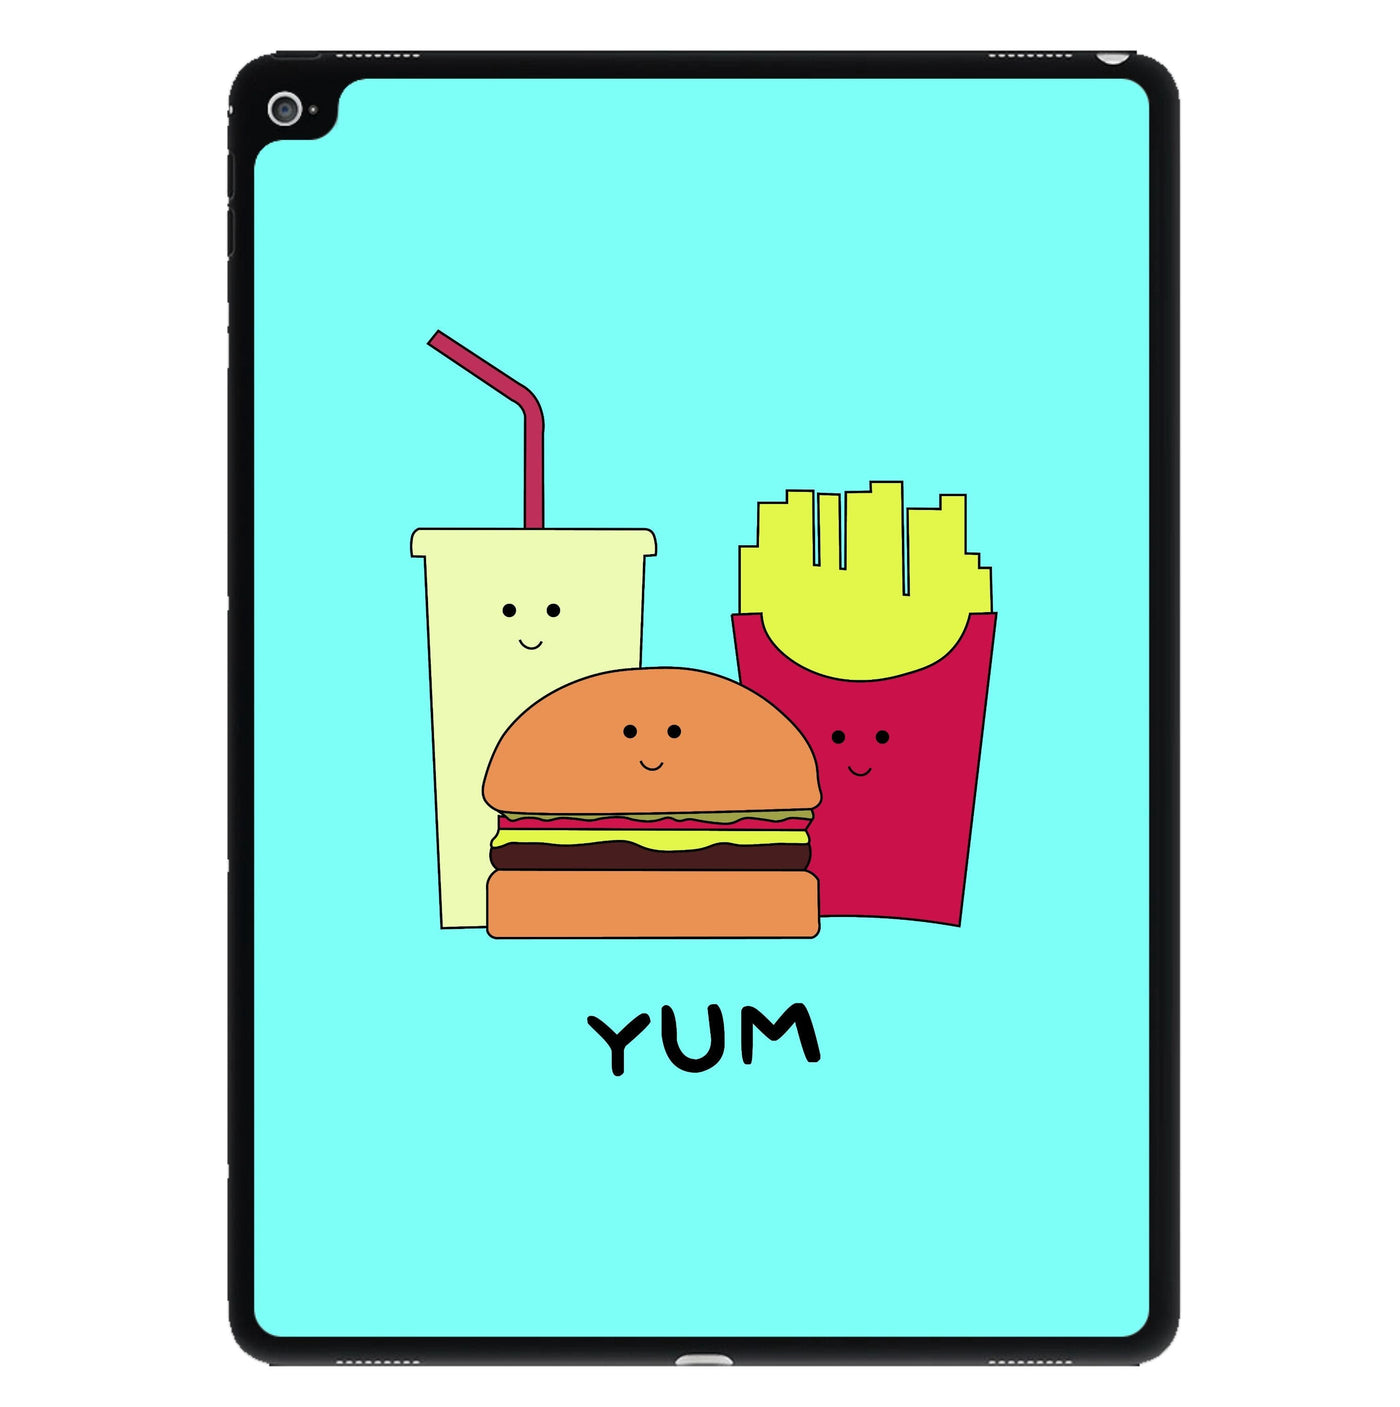 Fast Food Meal - Fast Food Patterns iPad Case